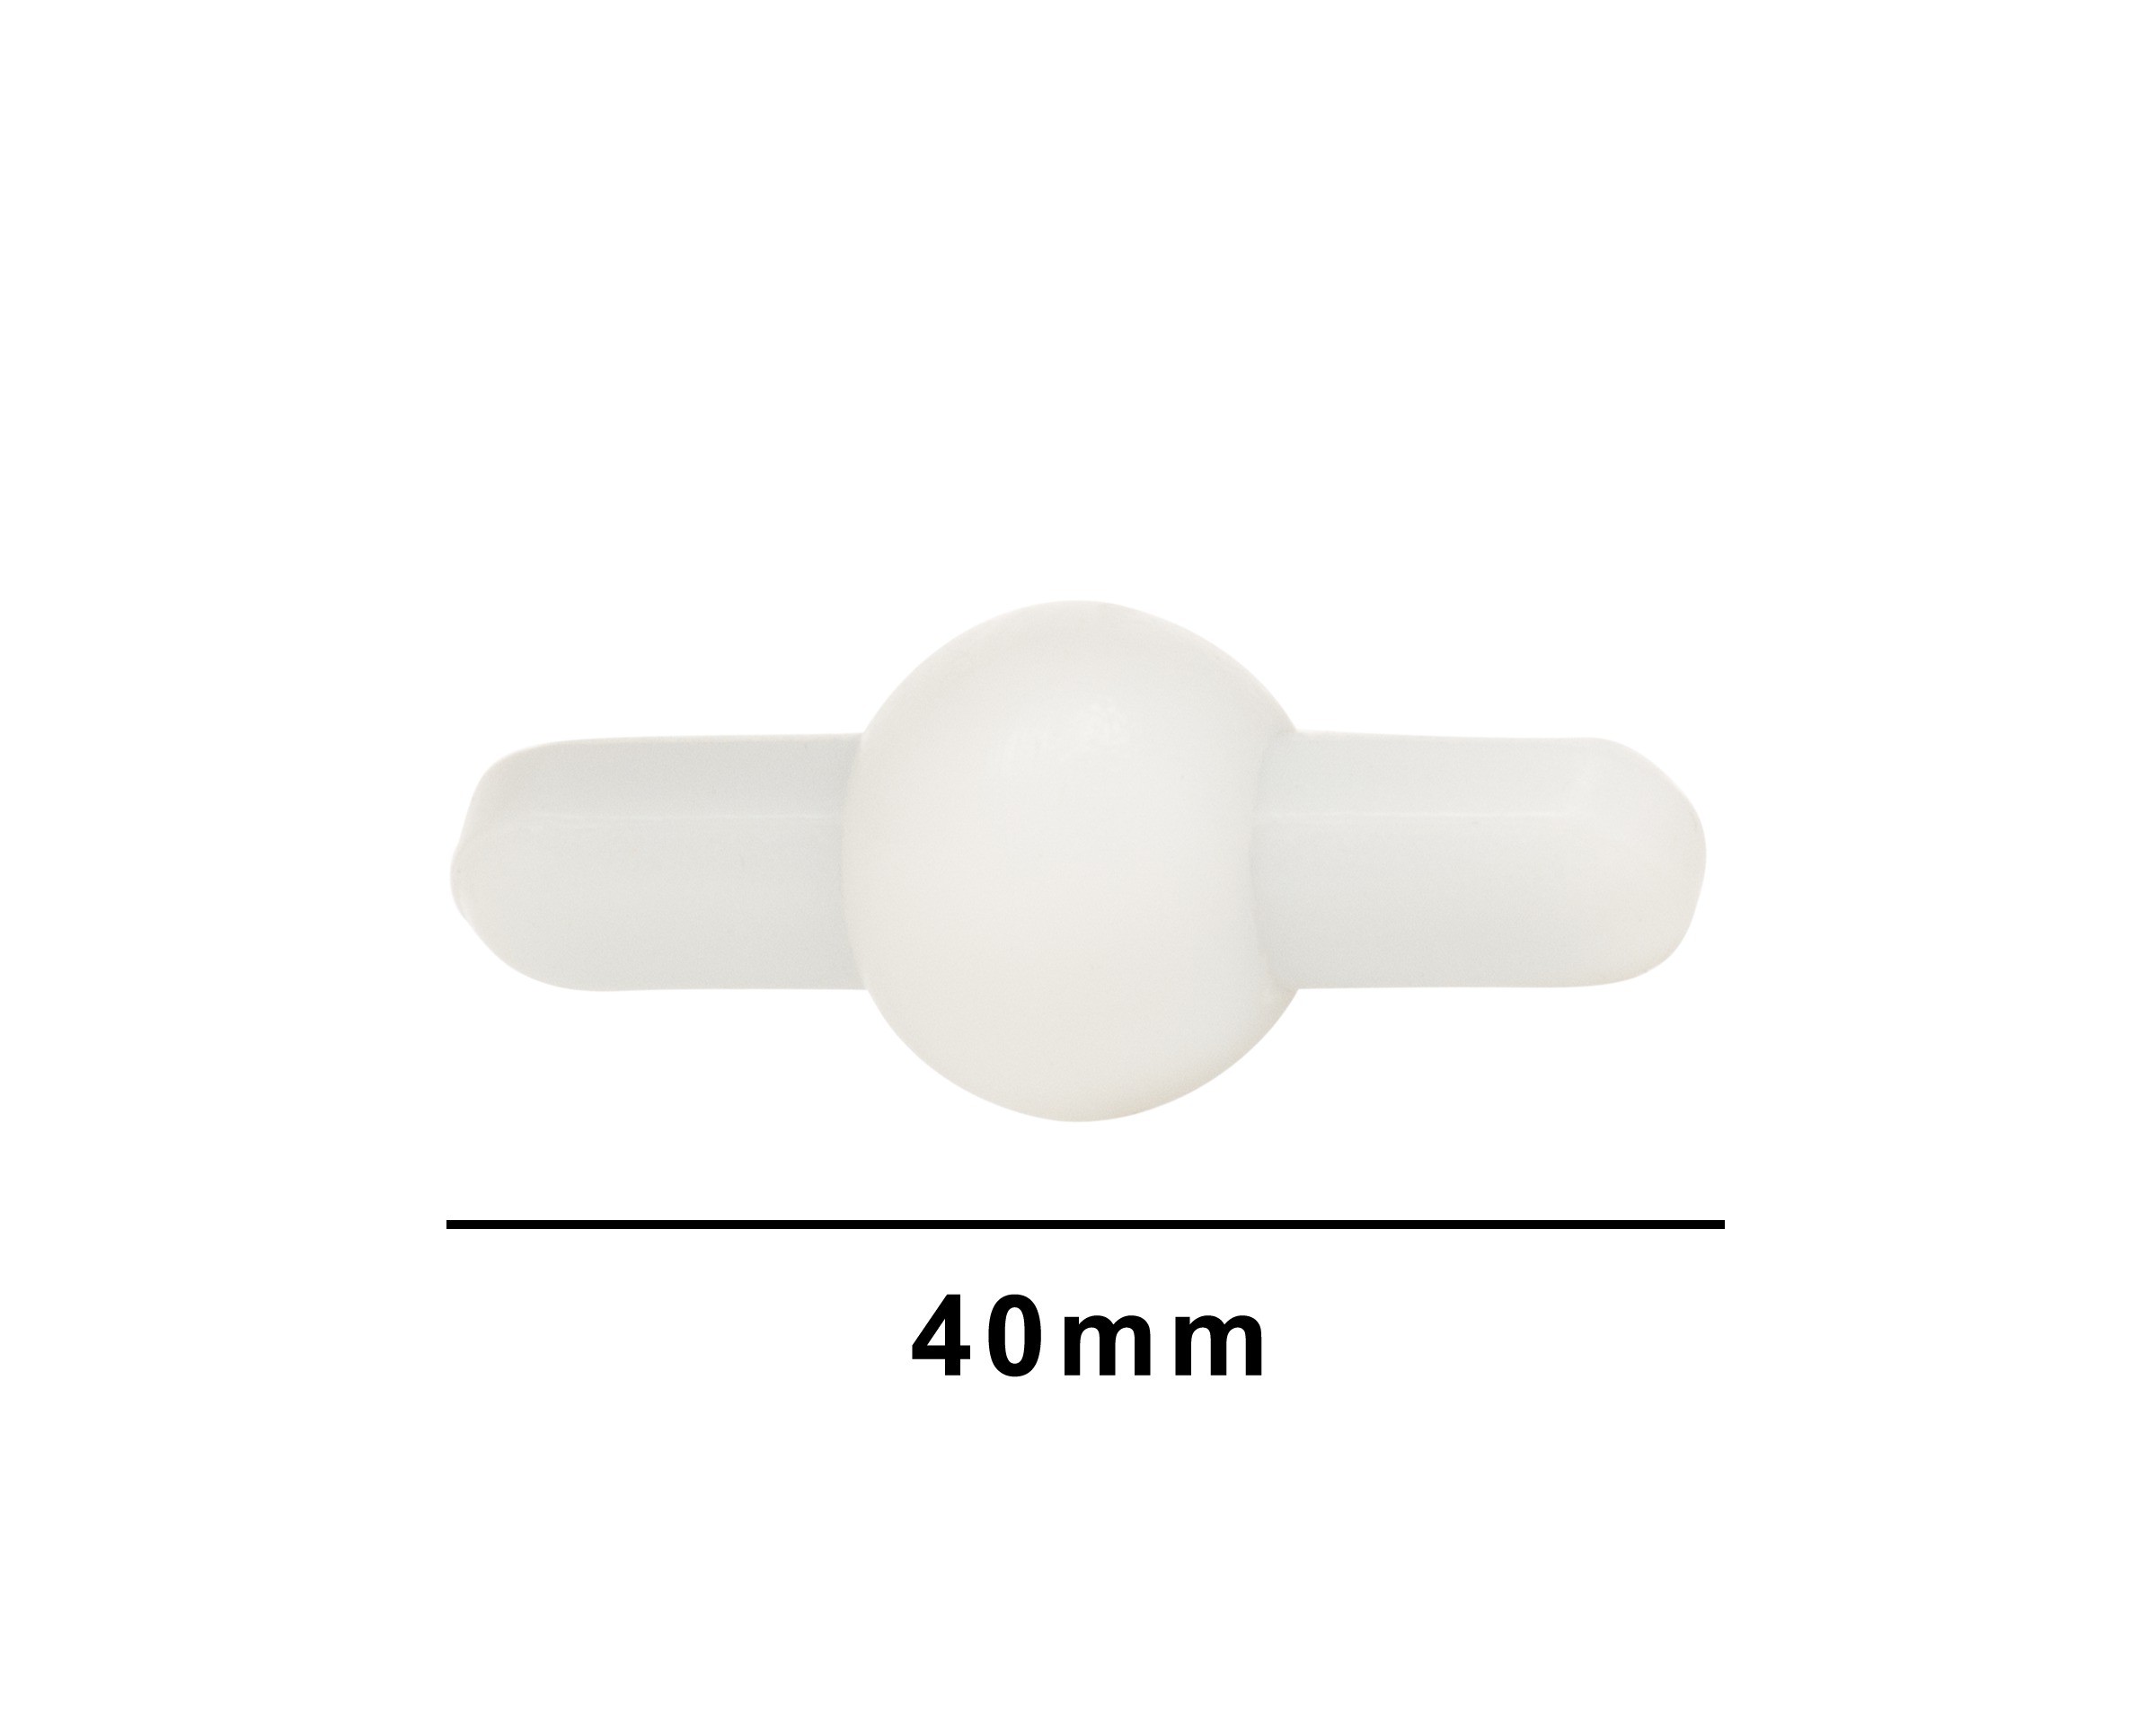 SP Bel-Art Saturn Spinbar Teflon Magnetic Stirring Bar; 40mm, White